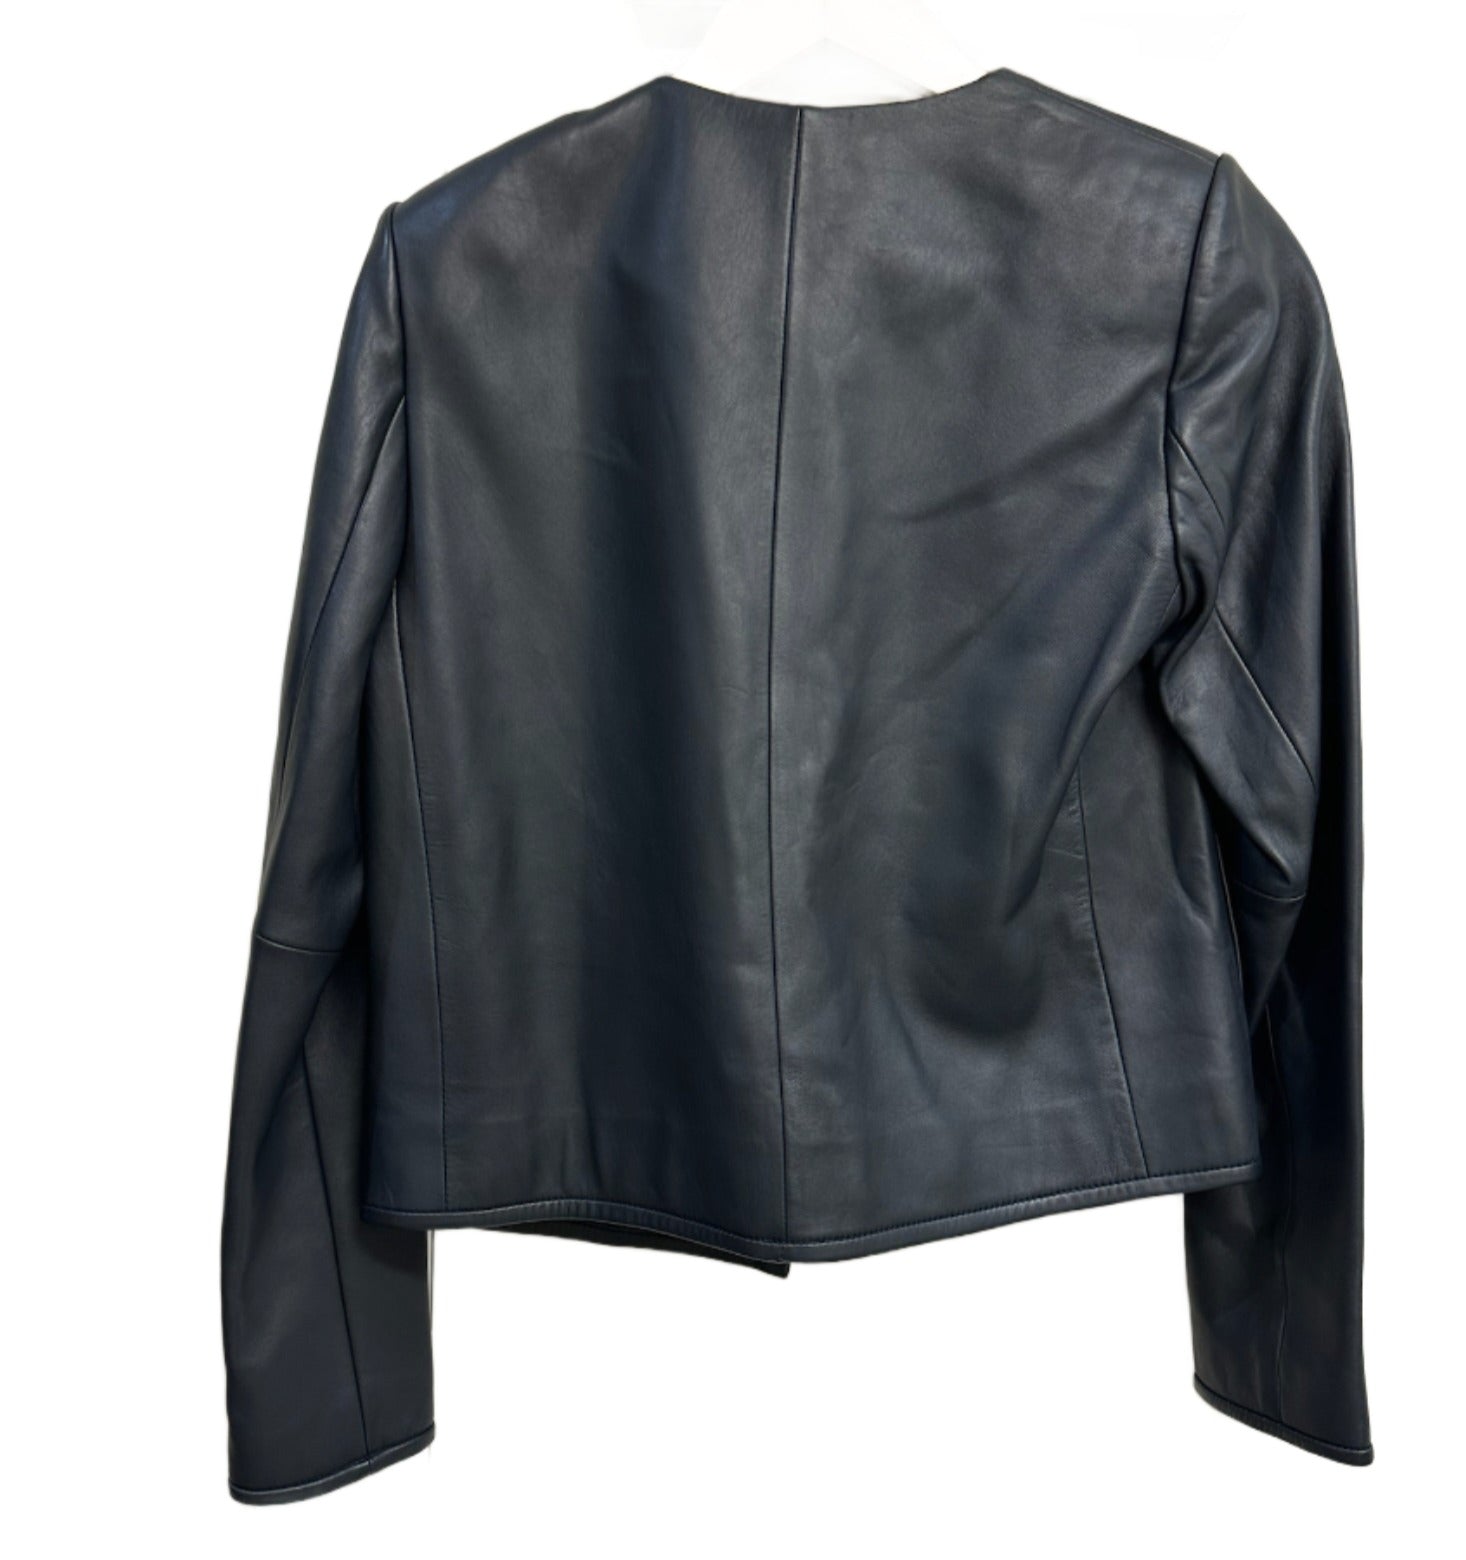 Sass & Bide Black Leather Jacket